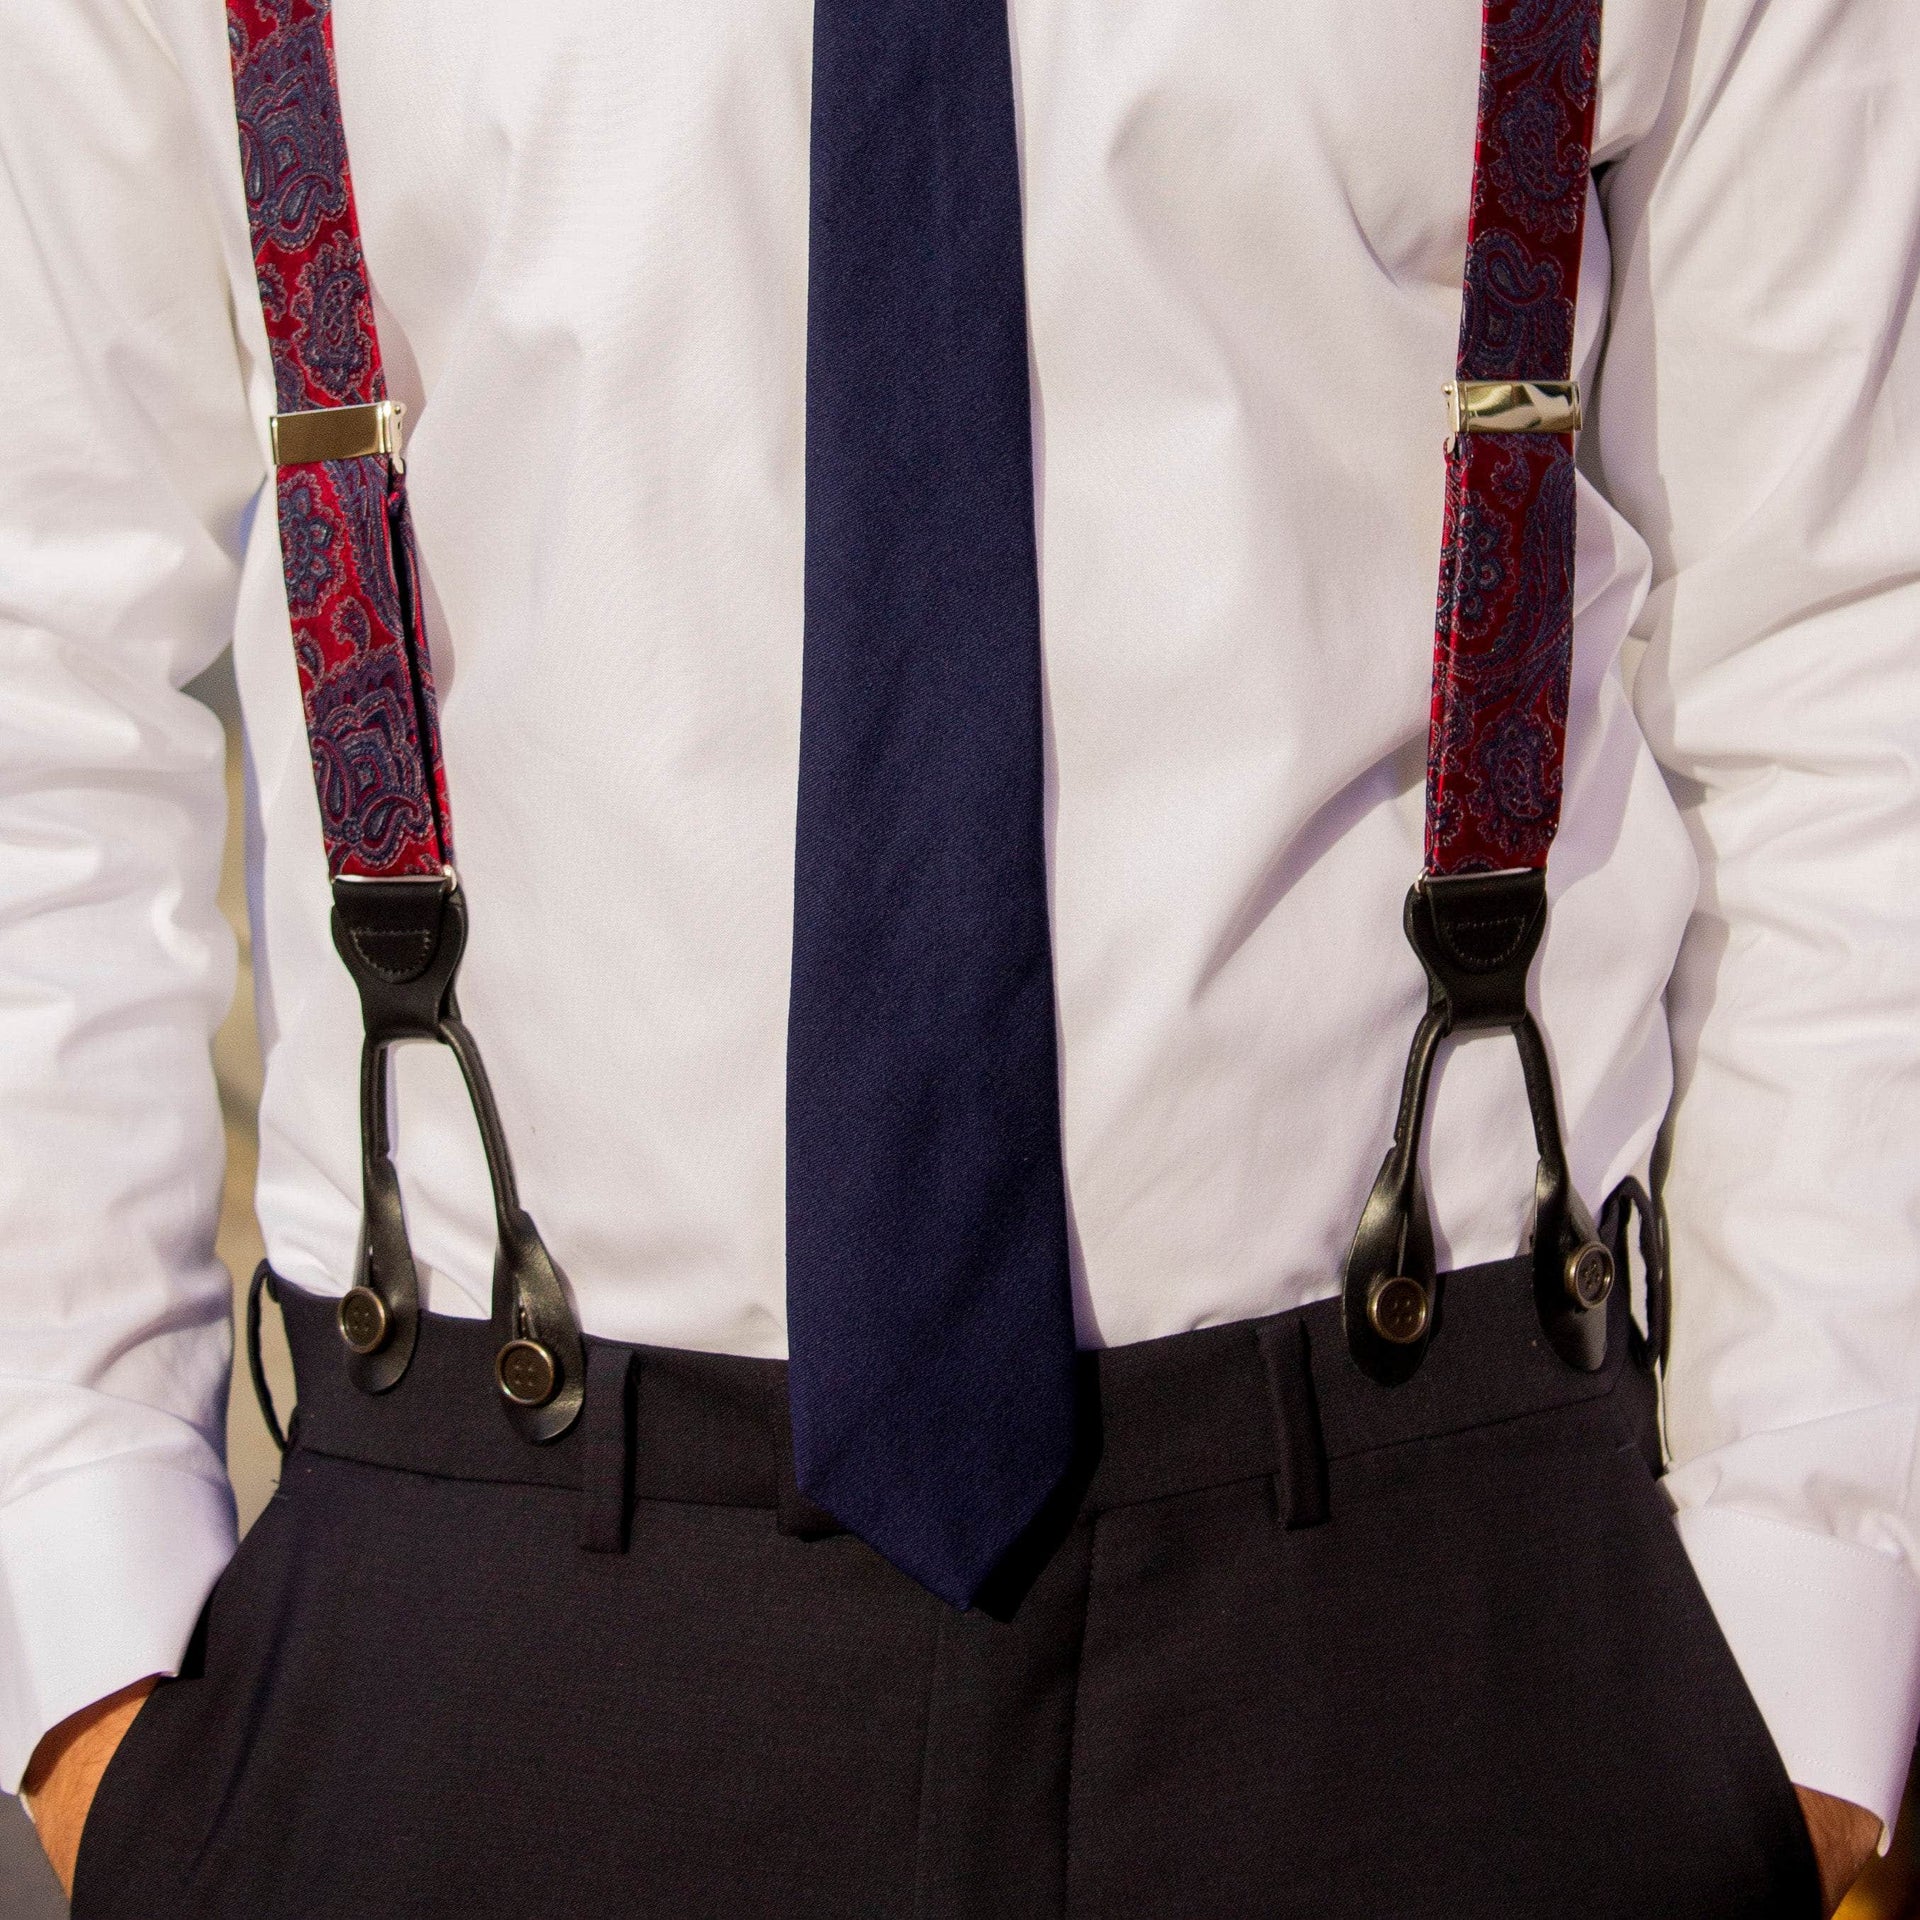 2 Brass Jumbo Suspender Clips - Sold in Packs of 4